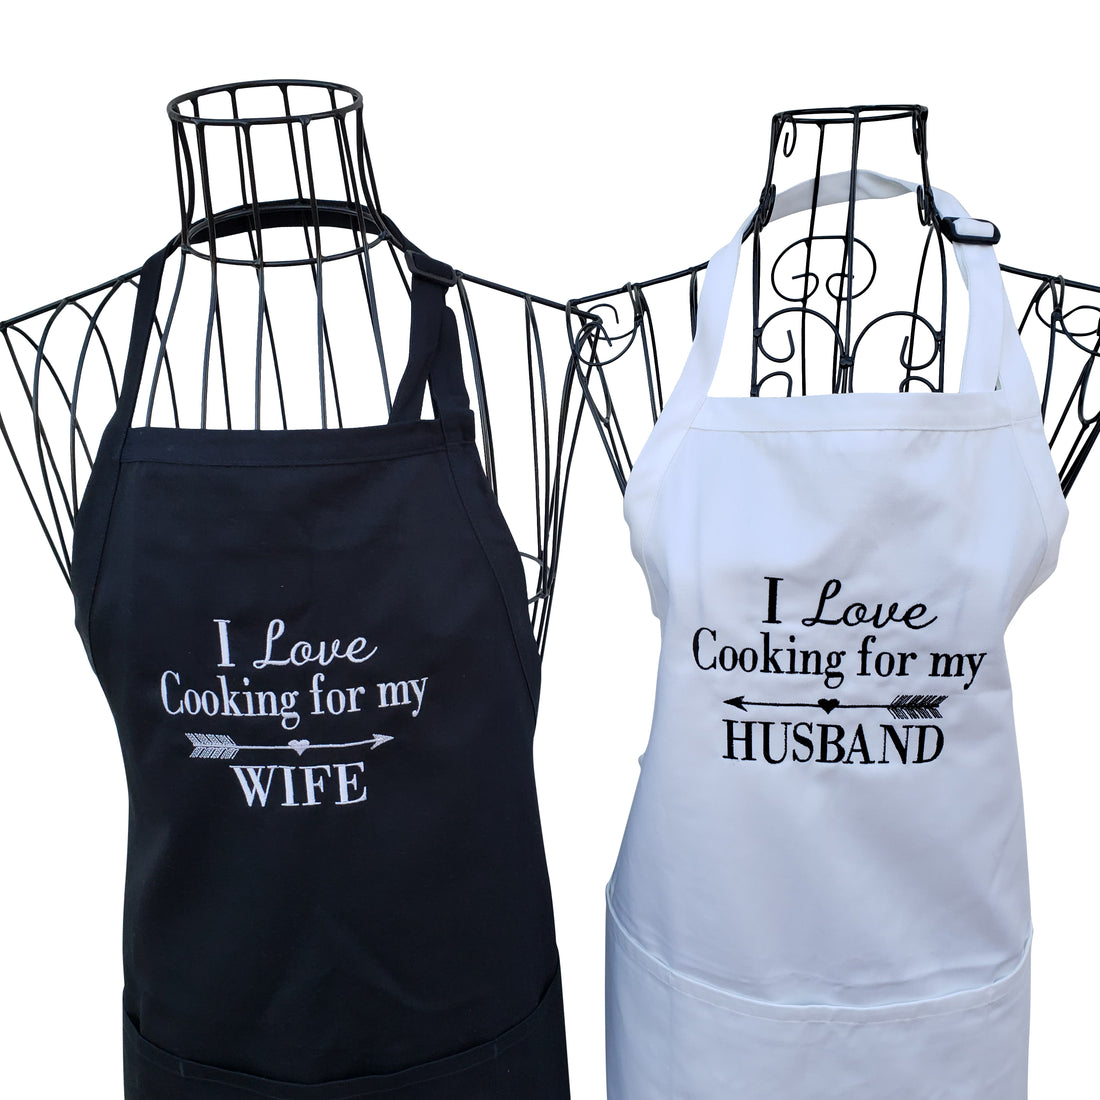 Couples apron set - Life Has Just Begun